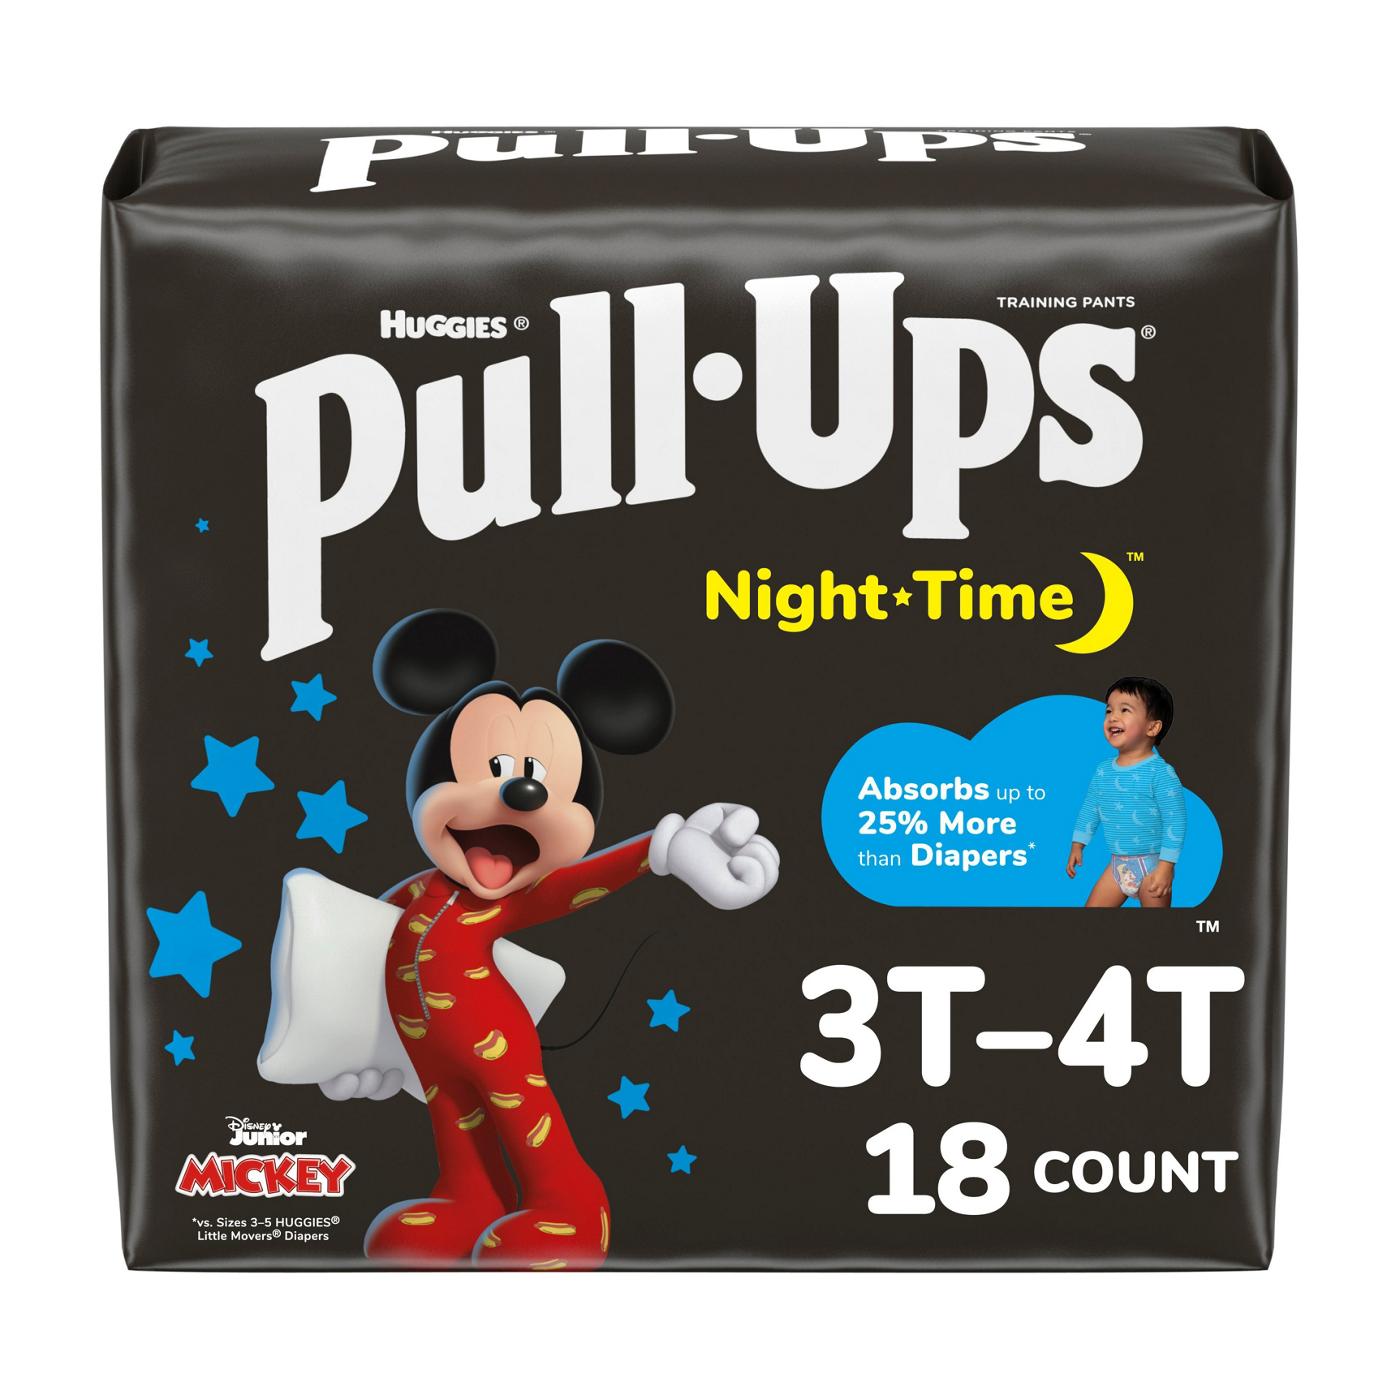  Pull-Ups Boys' Night-Time Potty Training Pants